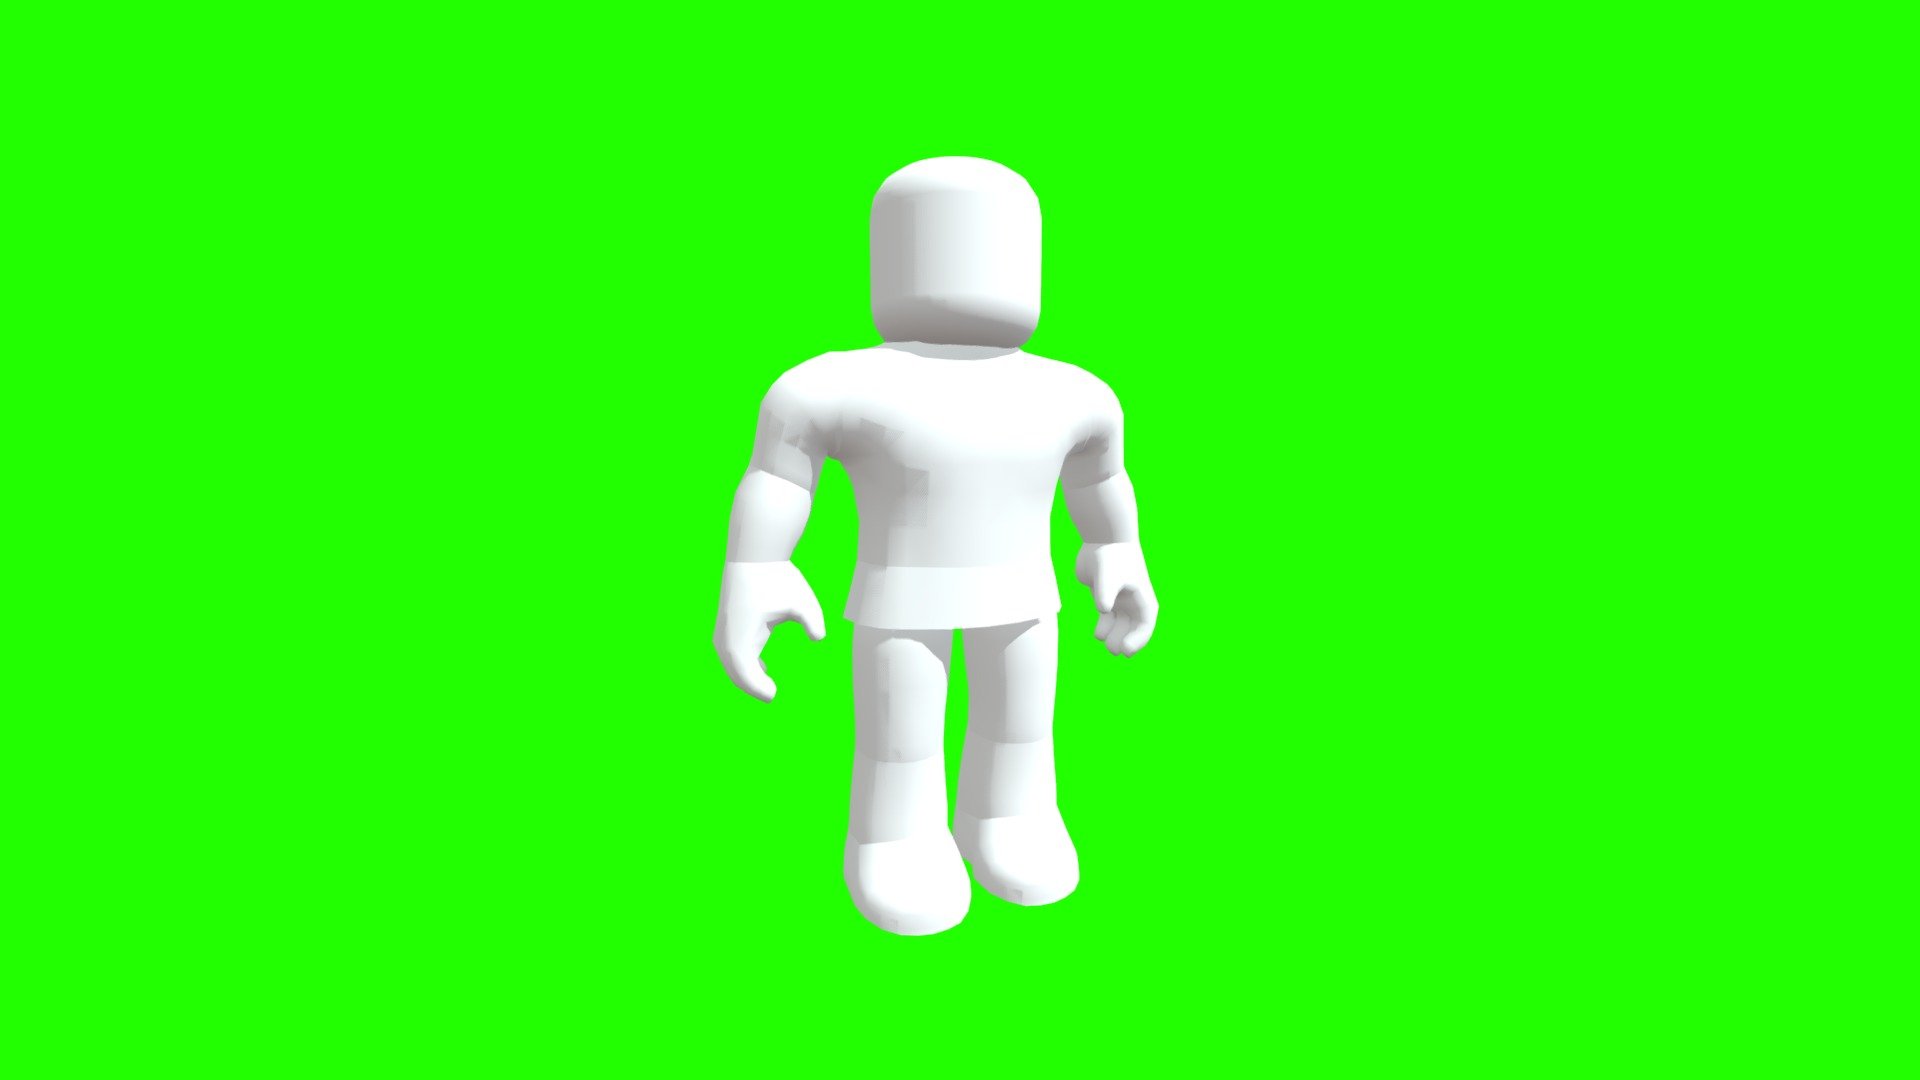 Roblox character “green screen”